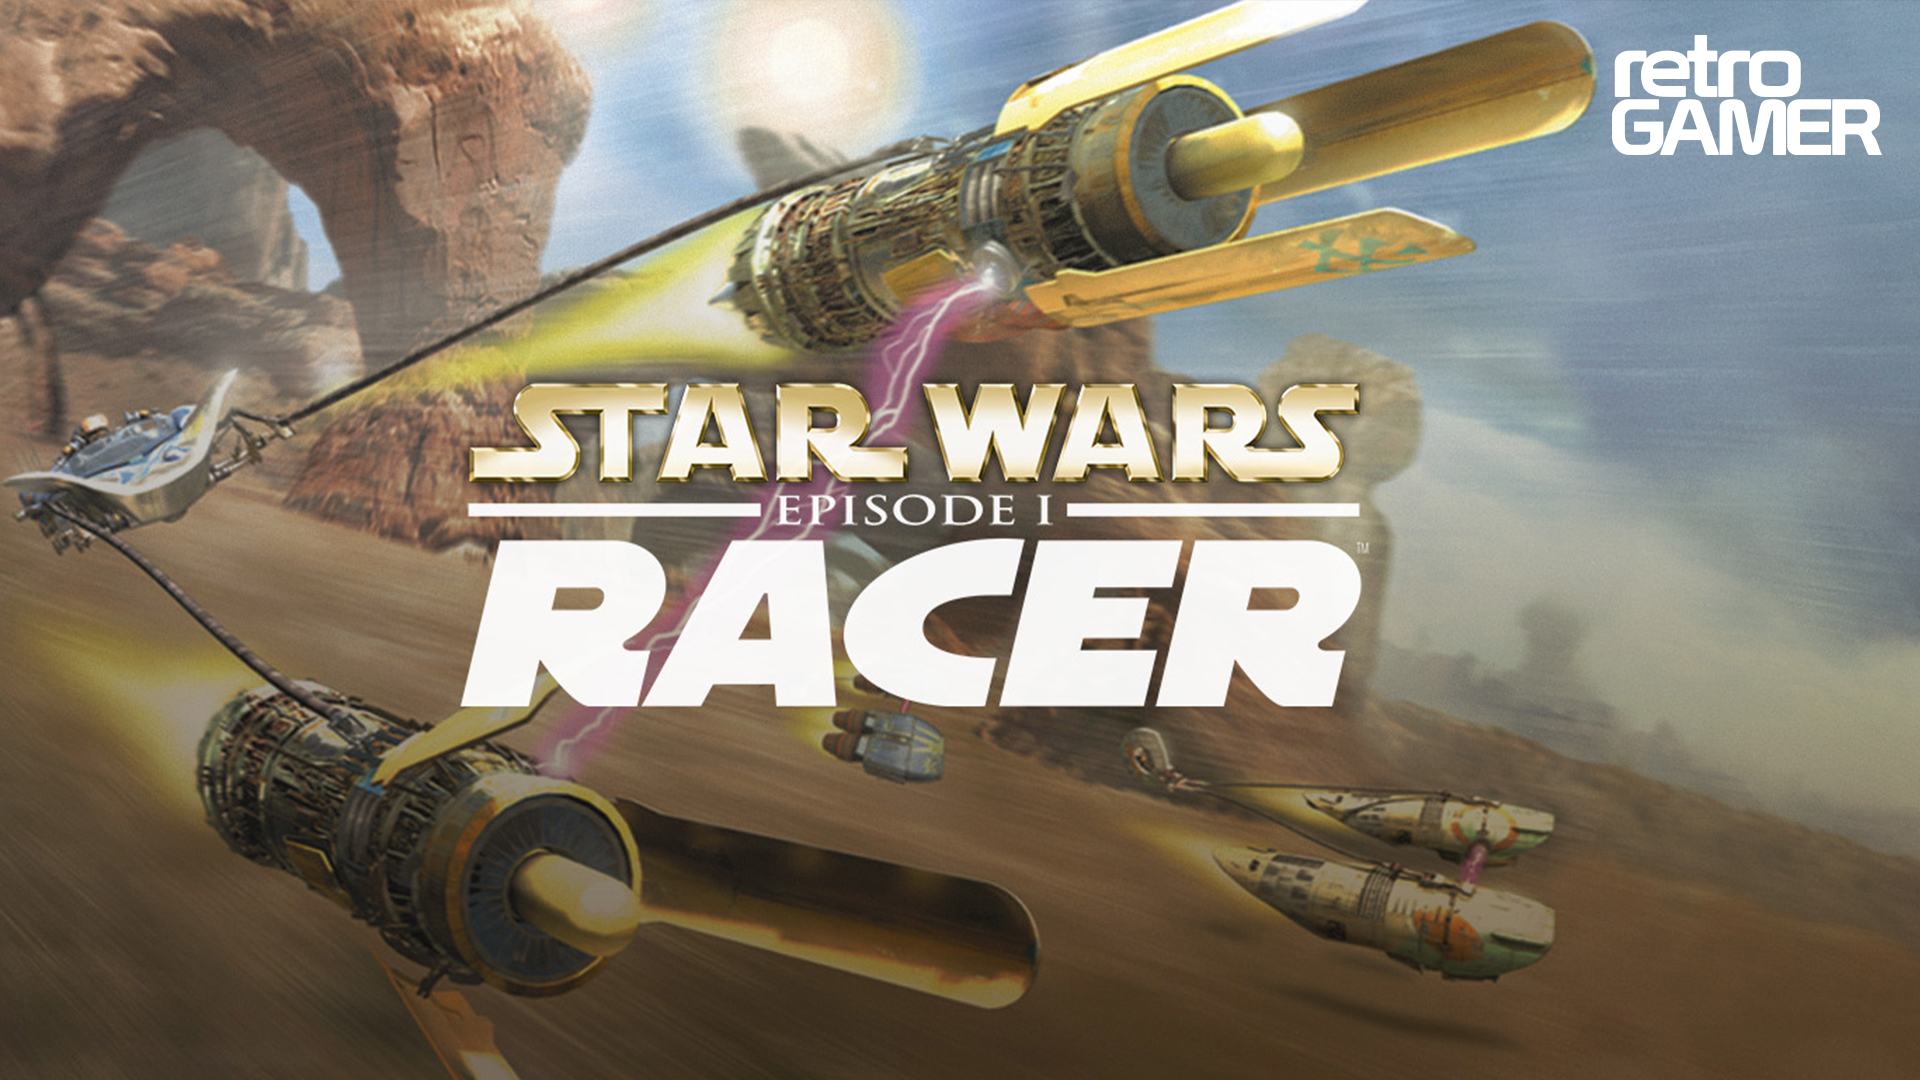 The making of Star Wars Episode 1: Racer – How a sneak peek at prototype podracers inspired this memorable Star Wars racing game